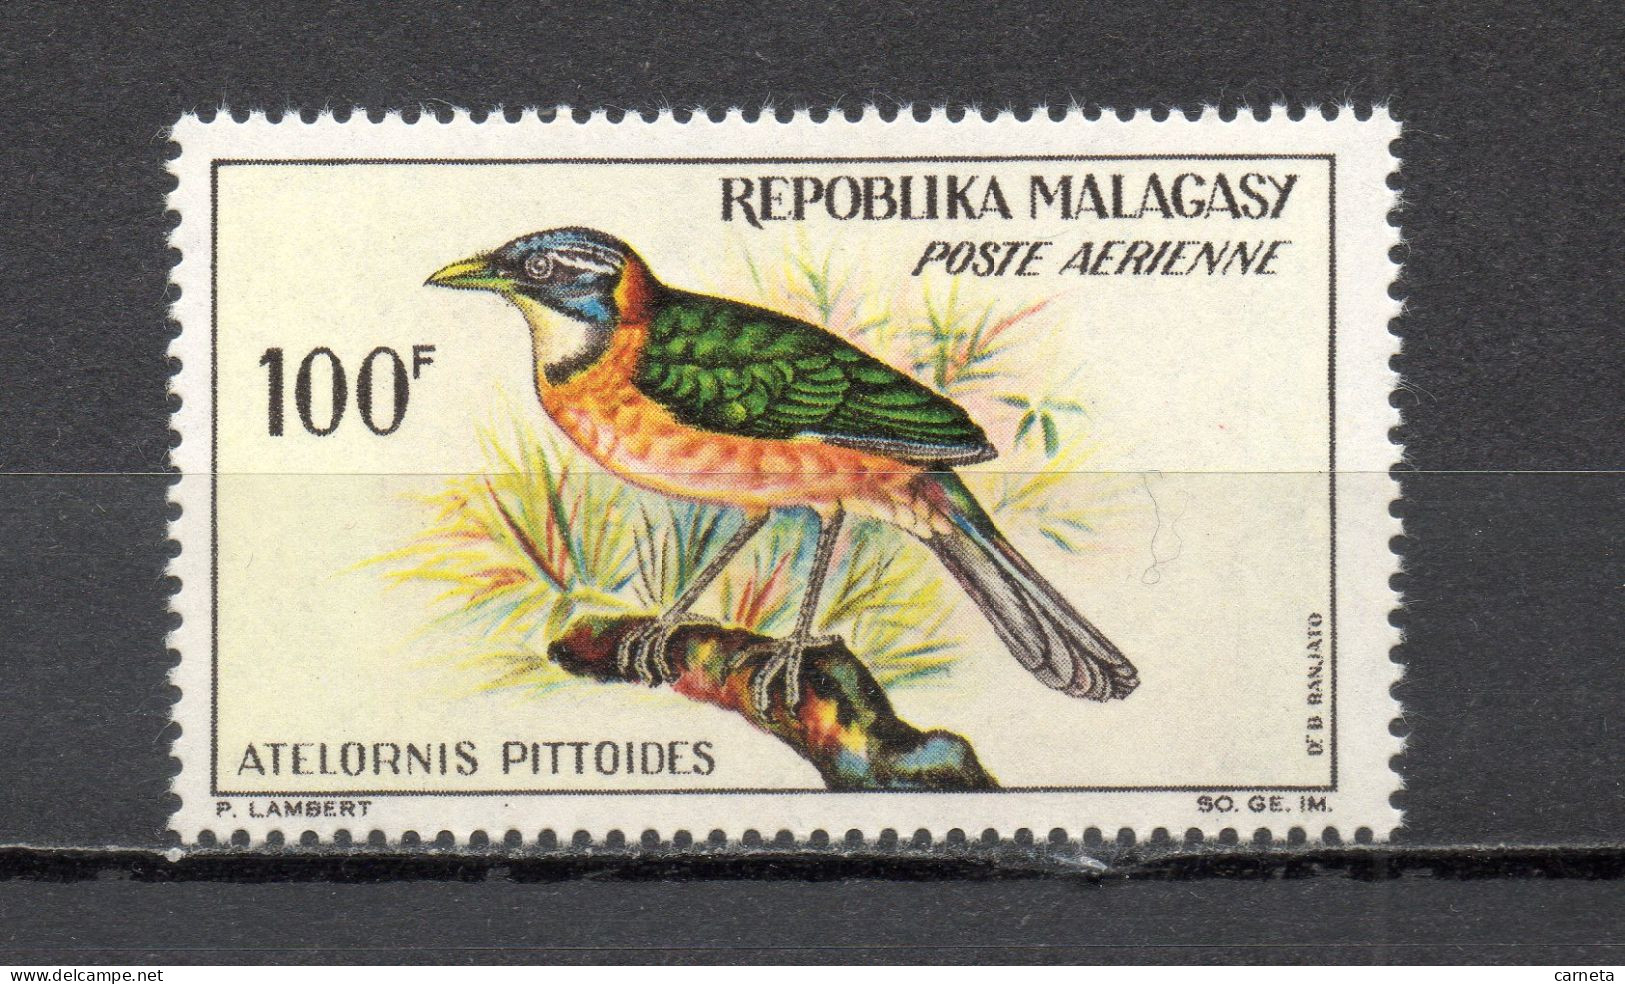 MADAGASCAR  PA  N° 90  NEUF SANS CHARNIERE  COTE 5.00€    OISEAUX ANIMAUX - Madagascar (1960-...)